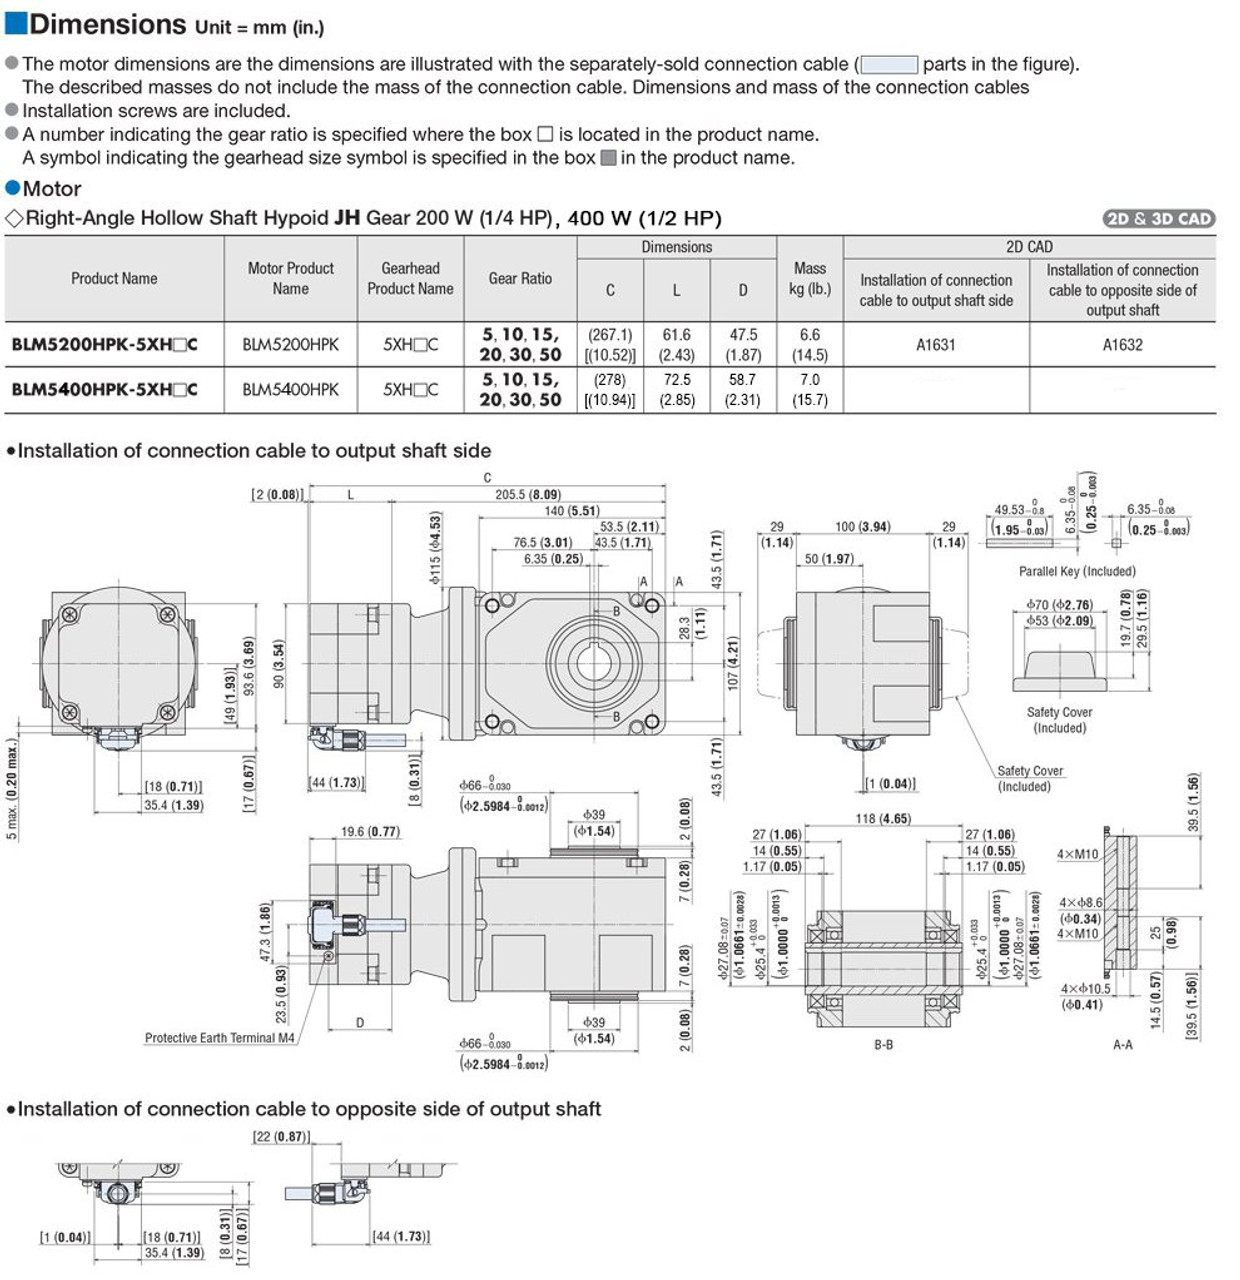 BLM5400HPK-5XH20C - Dimensions